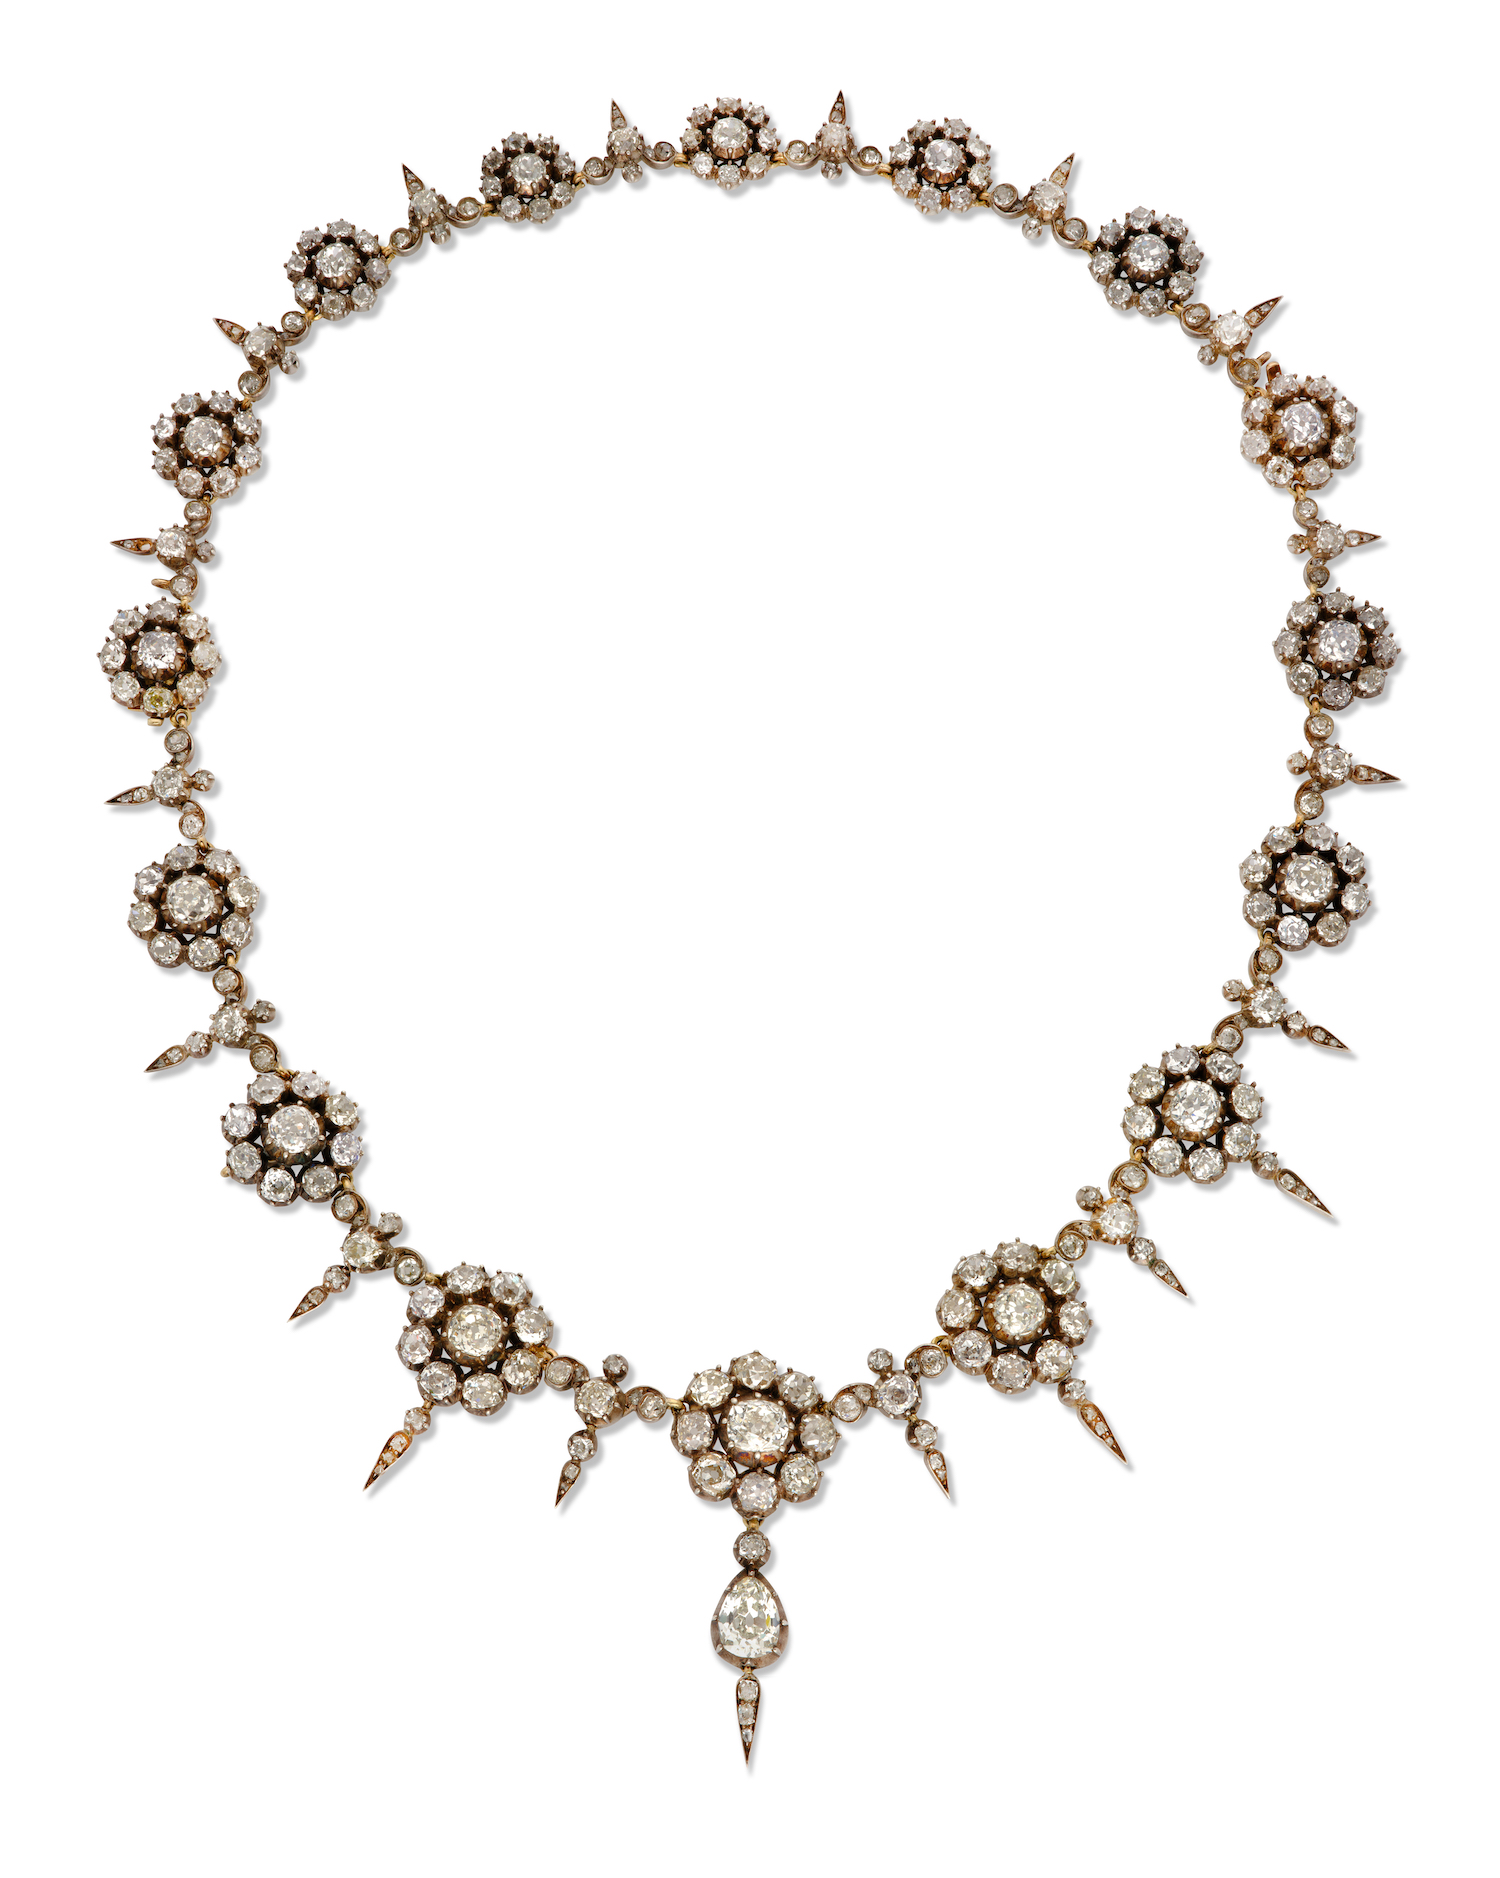 An antique diamond cluster necklace